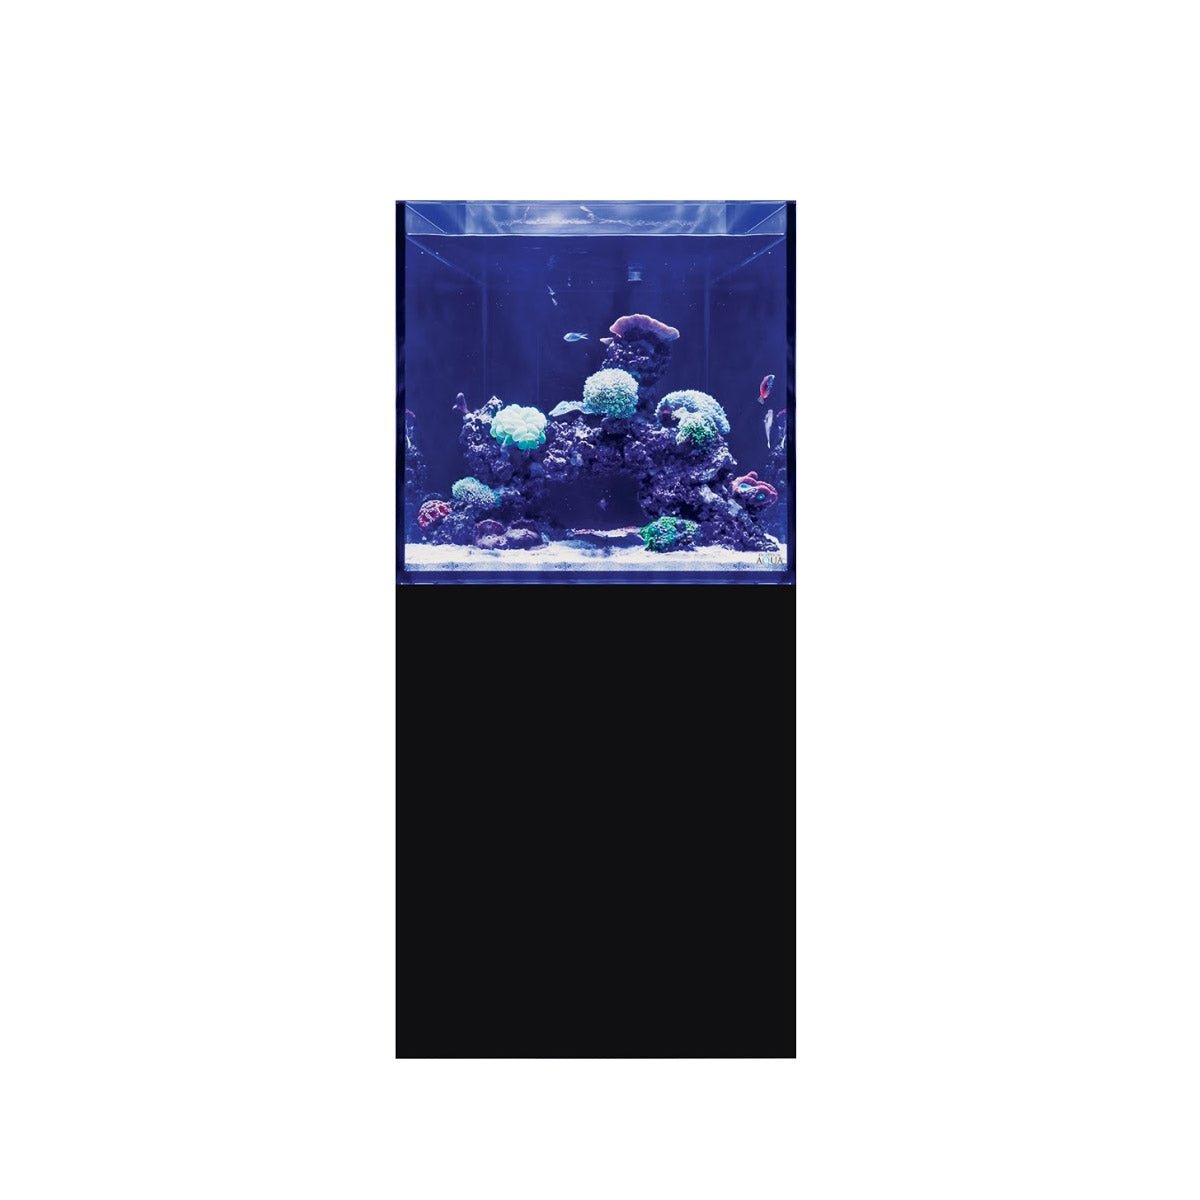 D-D Aqua-Pro Reef Cube 600 - Japanese Pear Gloss - Wooden Cabinet - Charterhouse Aquatics